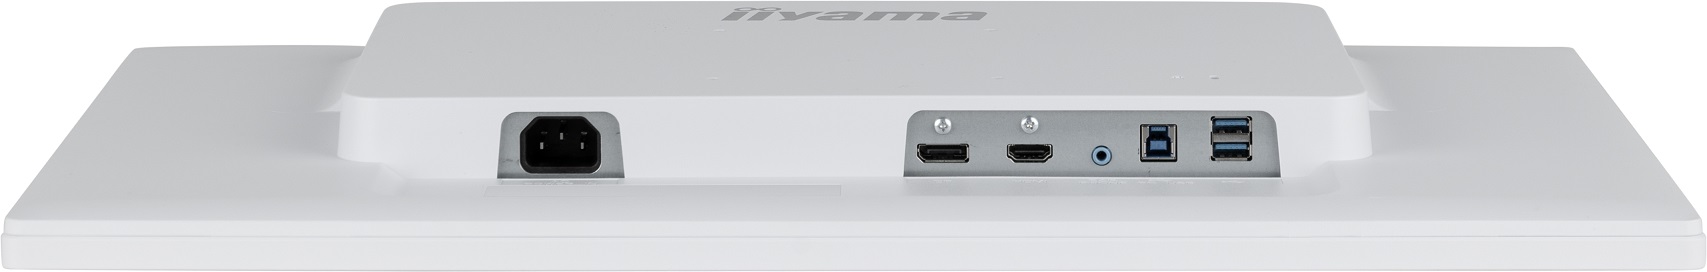 24" LCD iiyama T2452MSC-W1: PCAP, IPS, FHD, HDMI, whit 